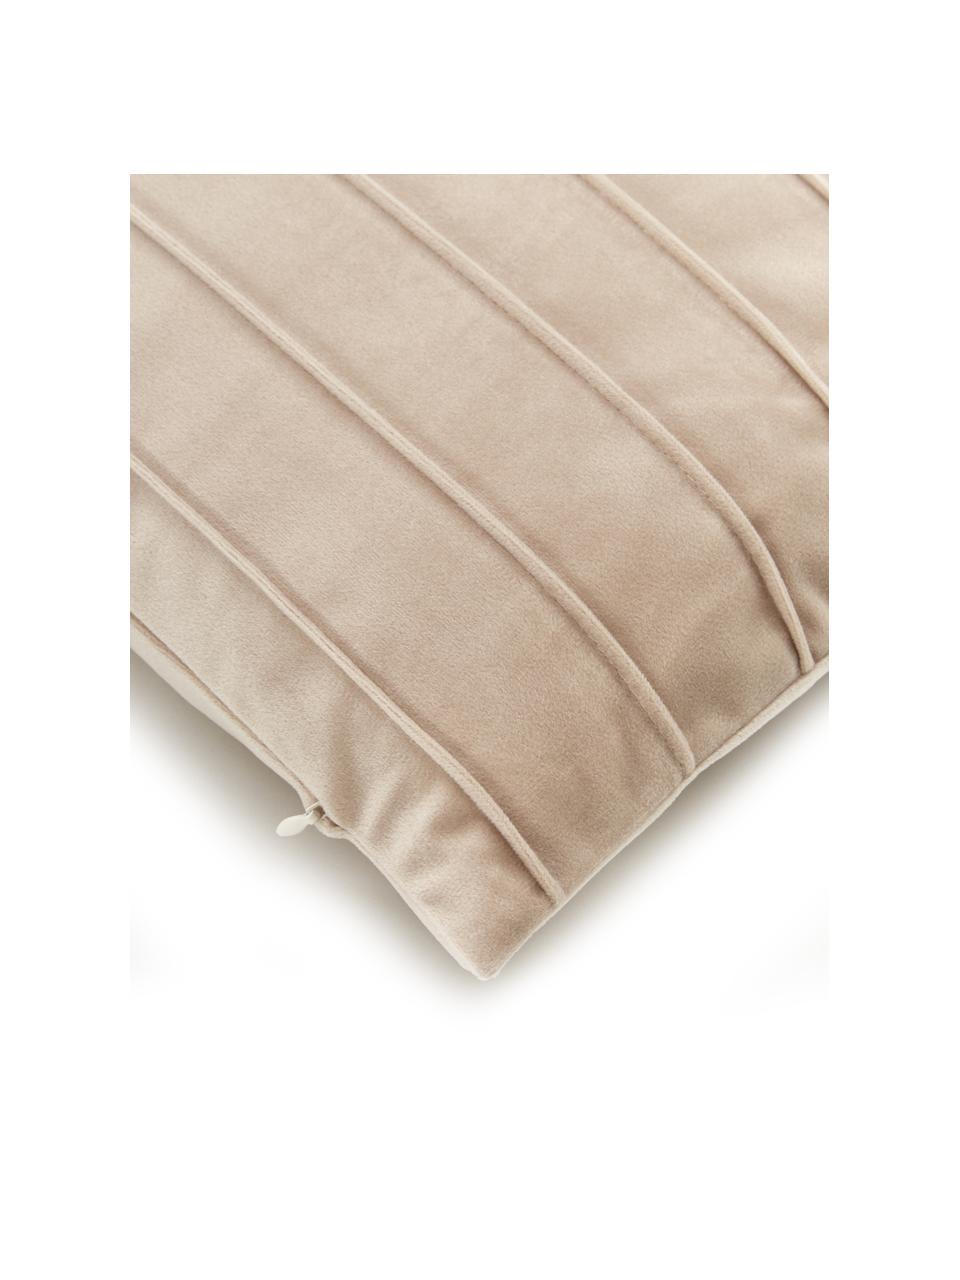 Housse de coussin en velours beige Lola, Velours (100 % polyester), Beige, larg. 30 x long. 50 cm